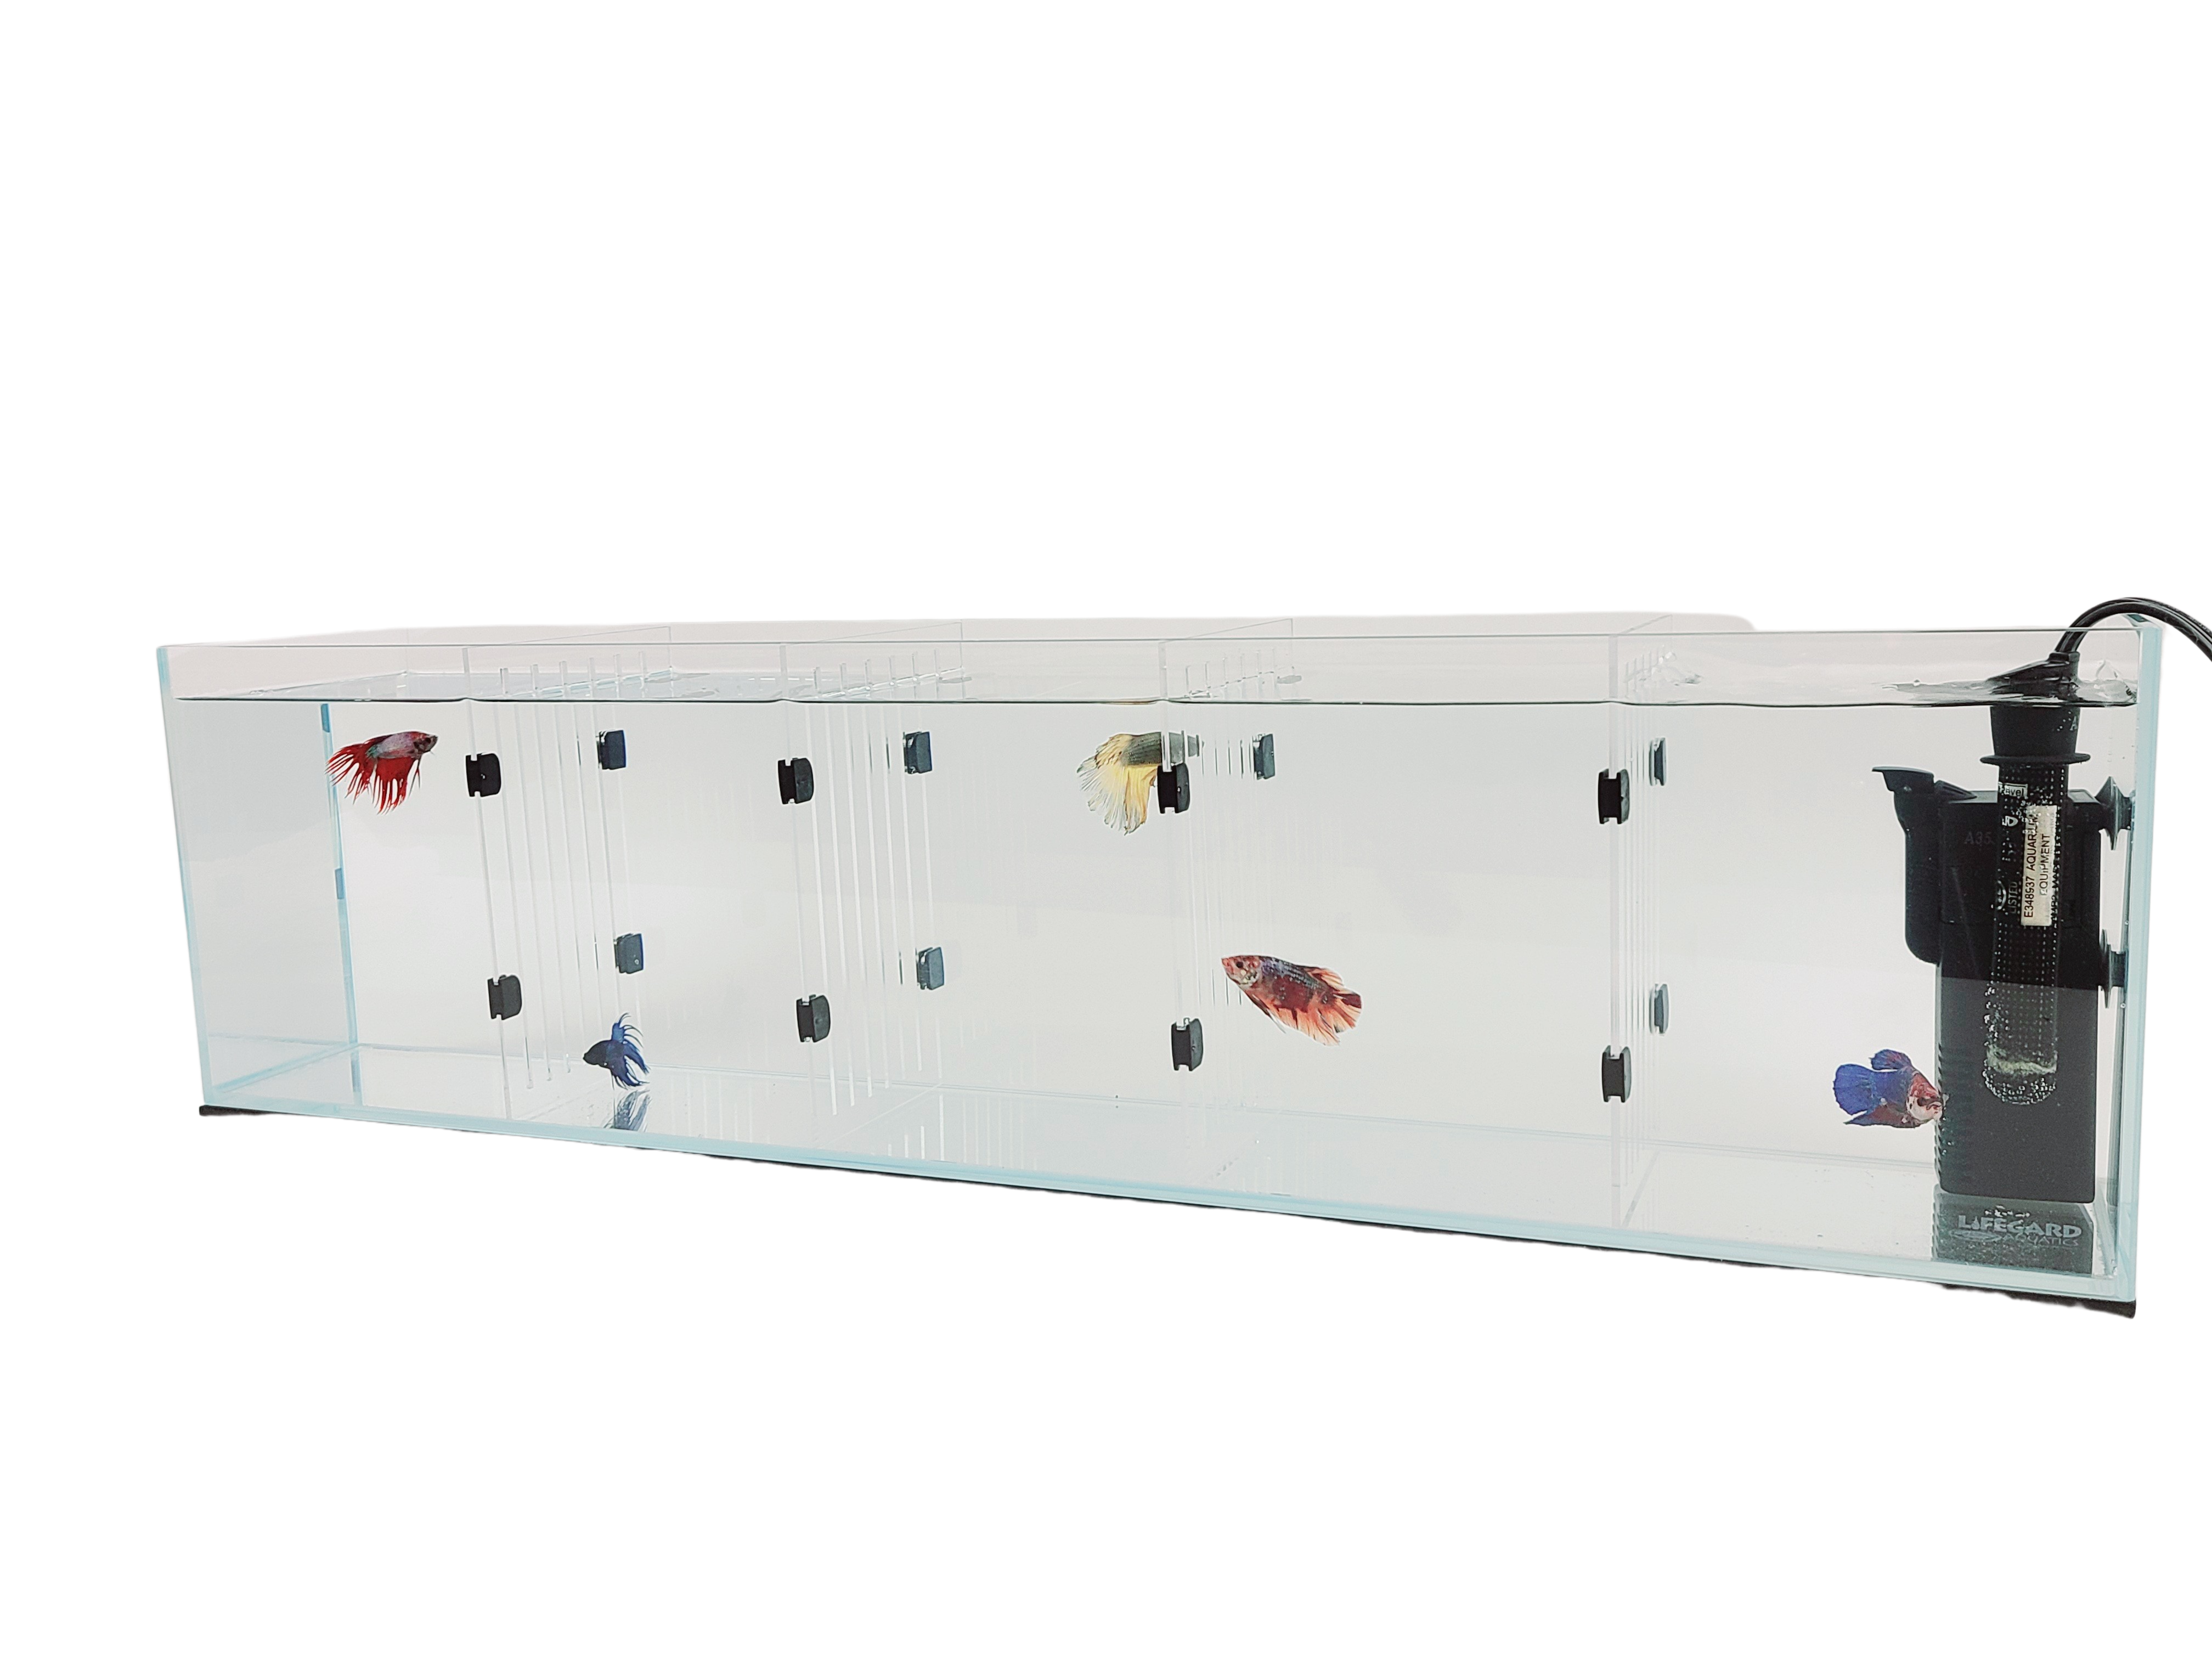 Acrylic Divider Plate for 22 Gallon Bookshelf Aquariums - CLEAR